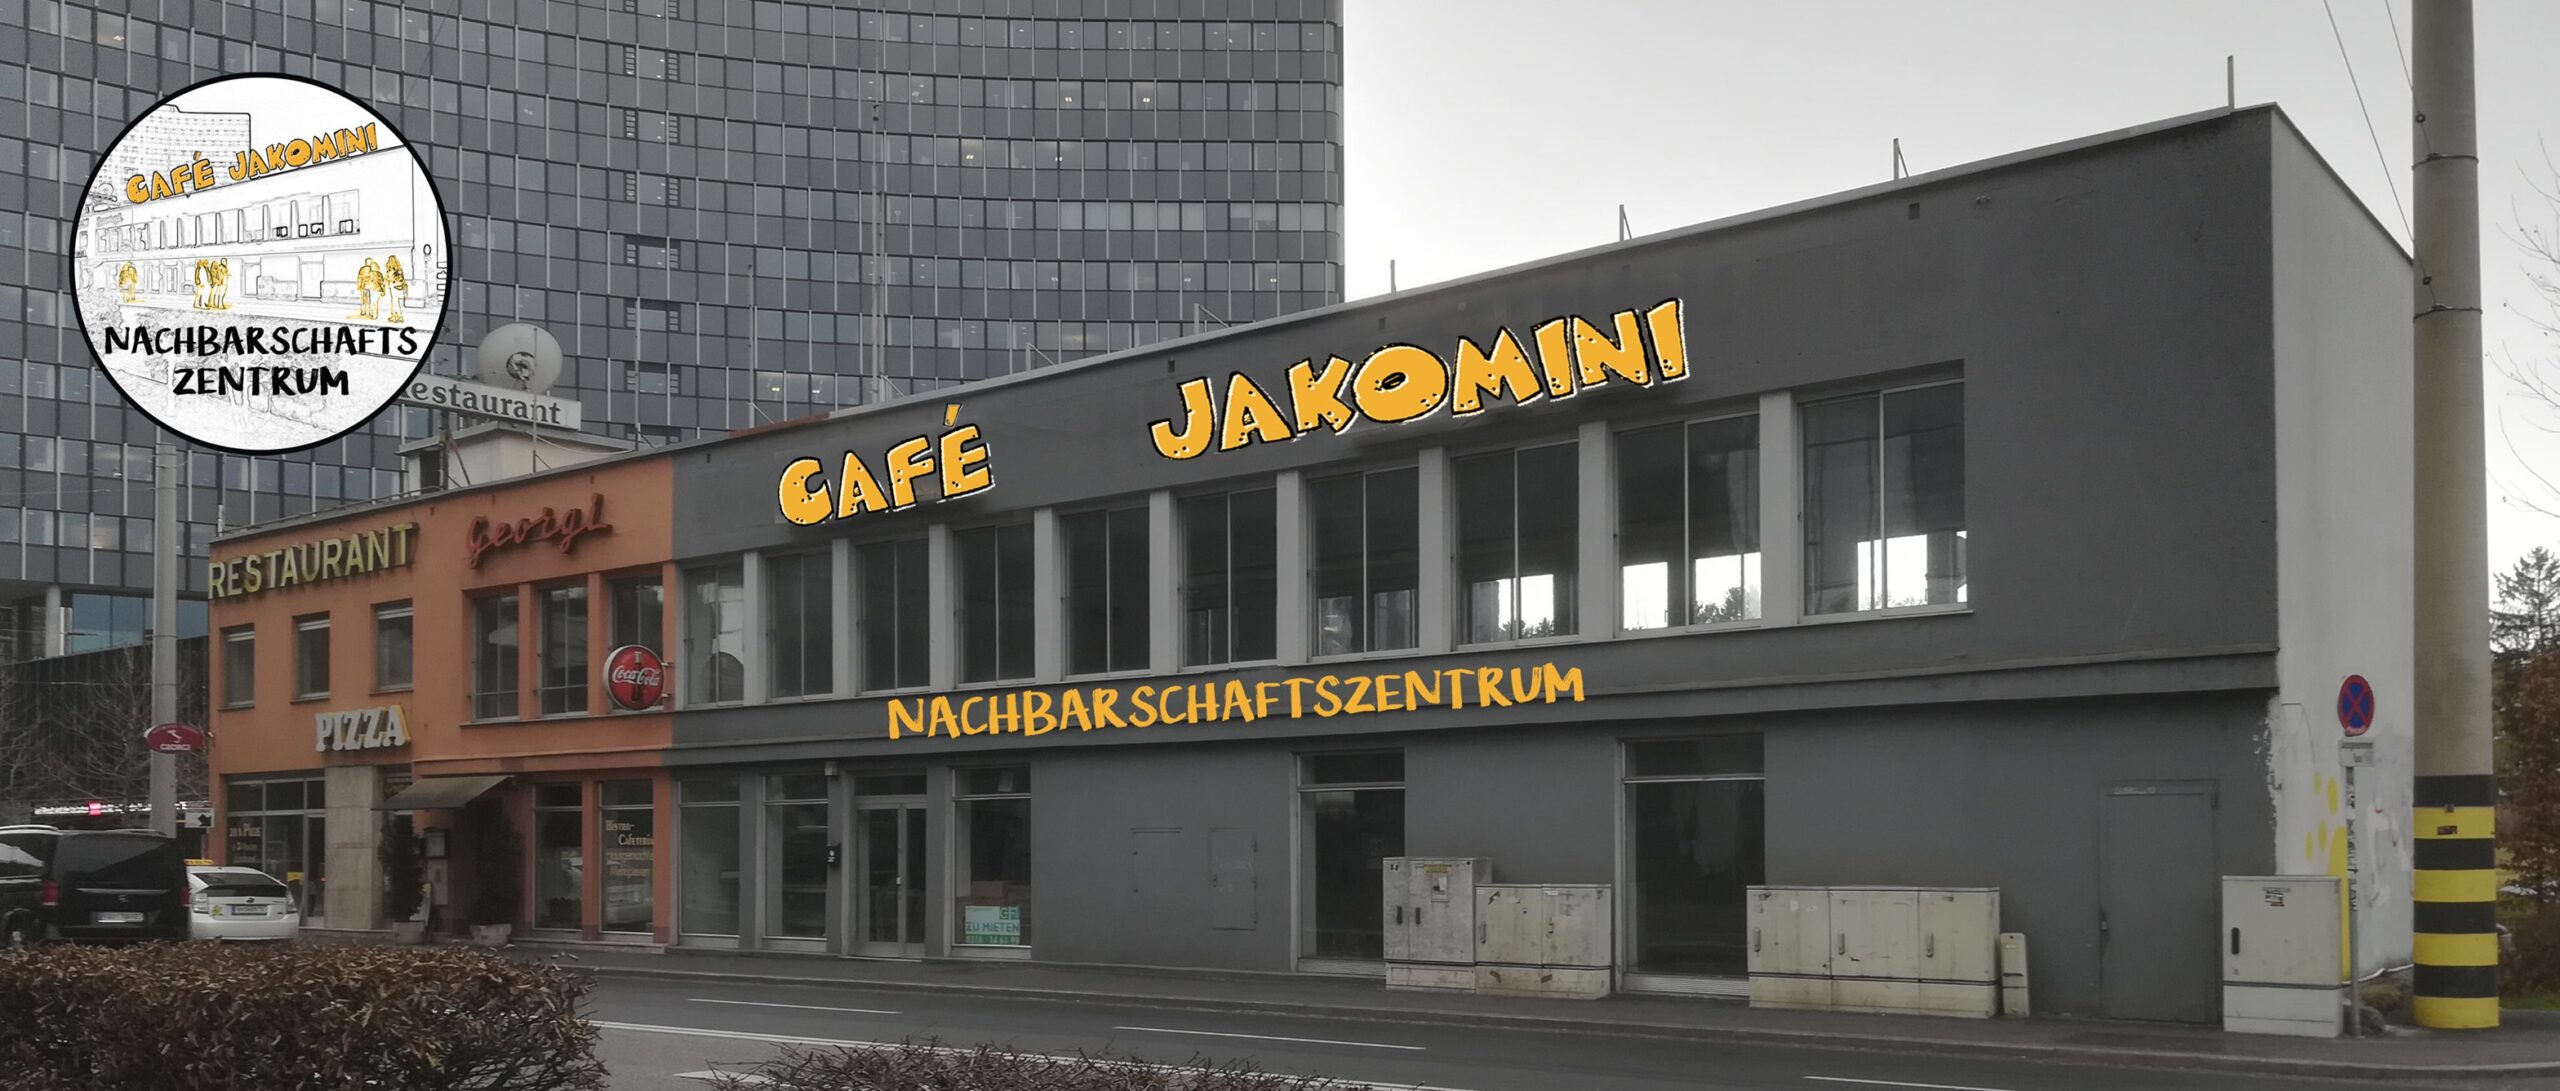 Nachbarschaftszentrum Café Jakomini